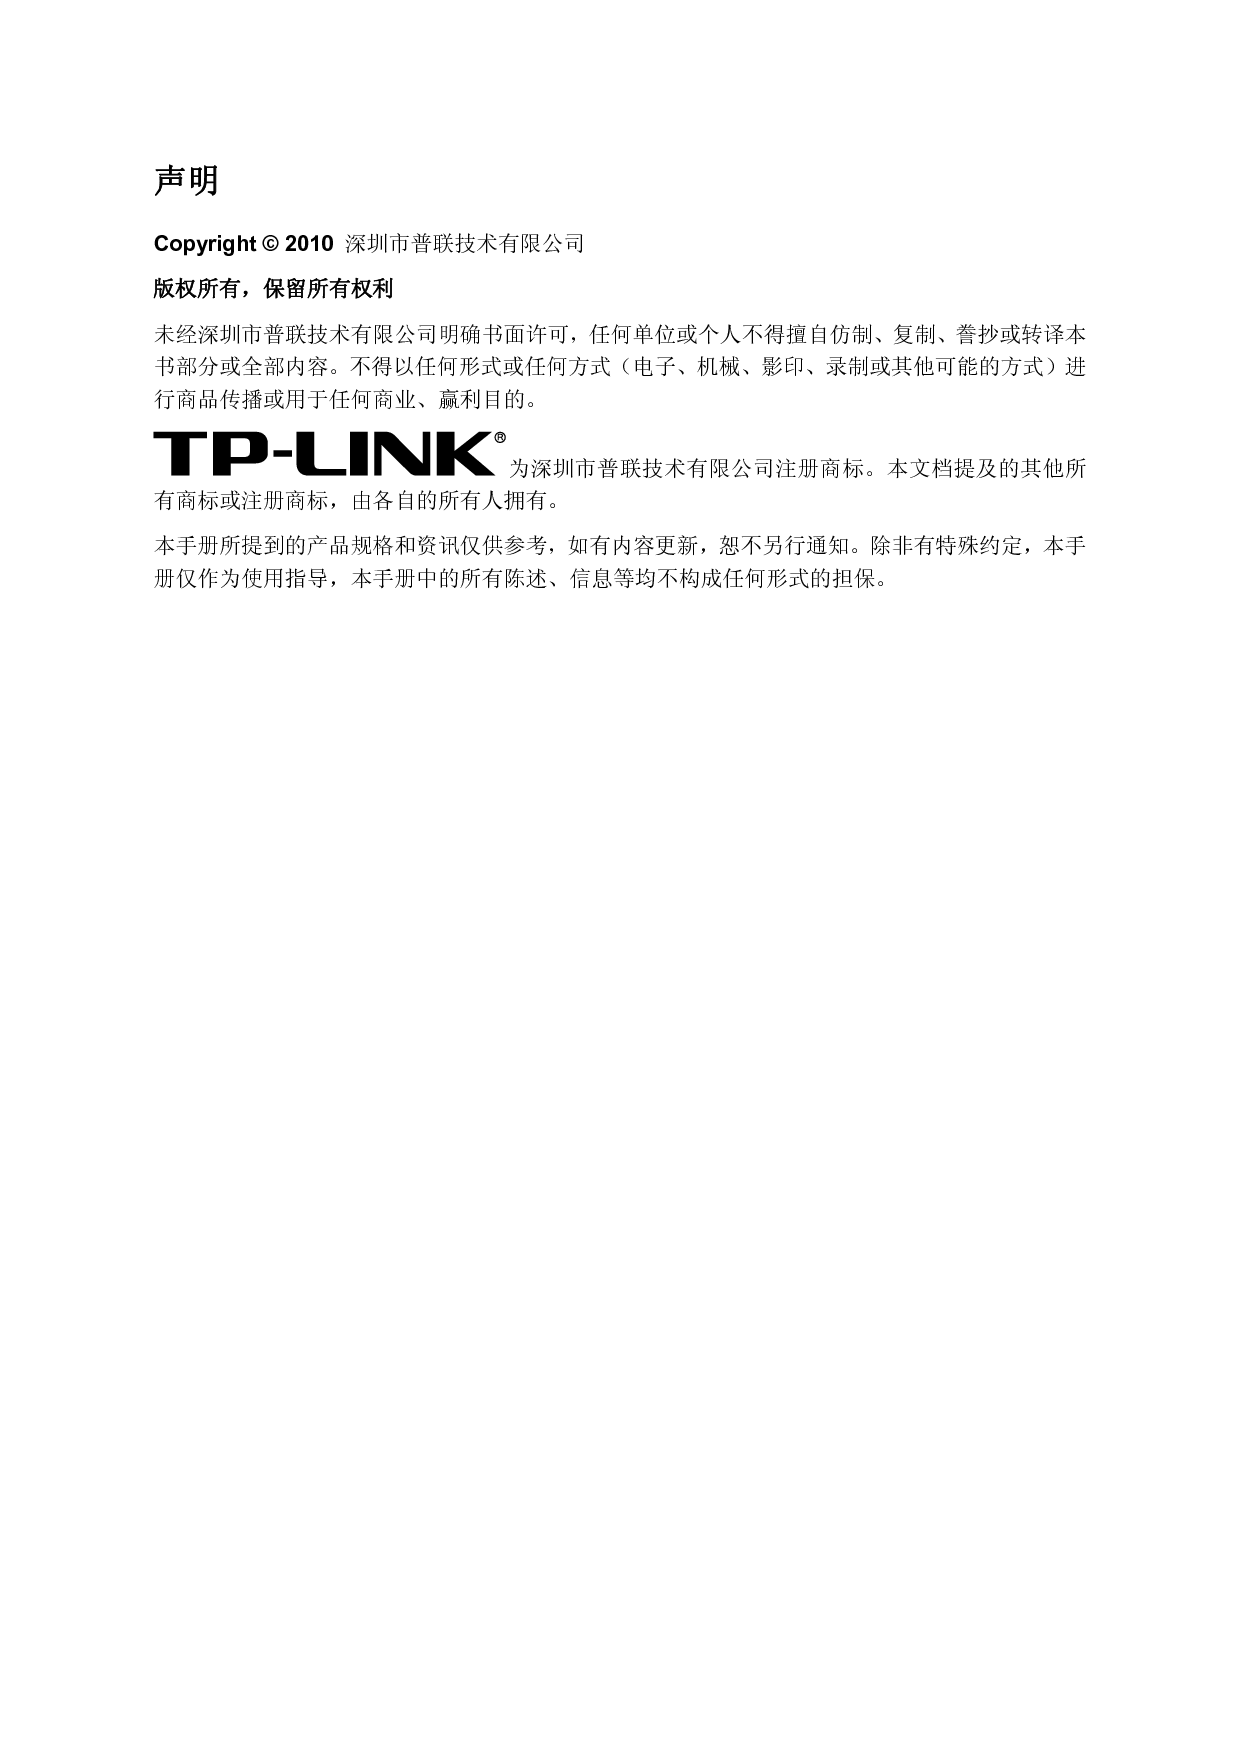 普联 TP-Link TL-WR840N 第一版 设置指南 第1页